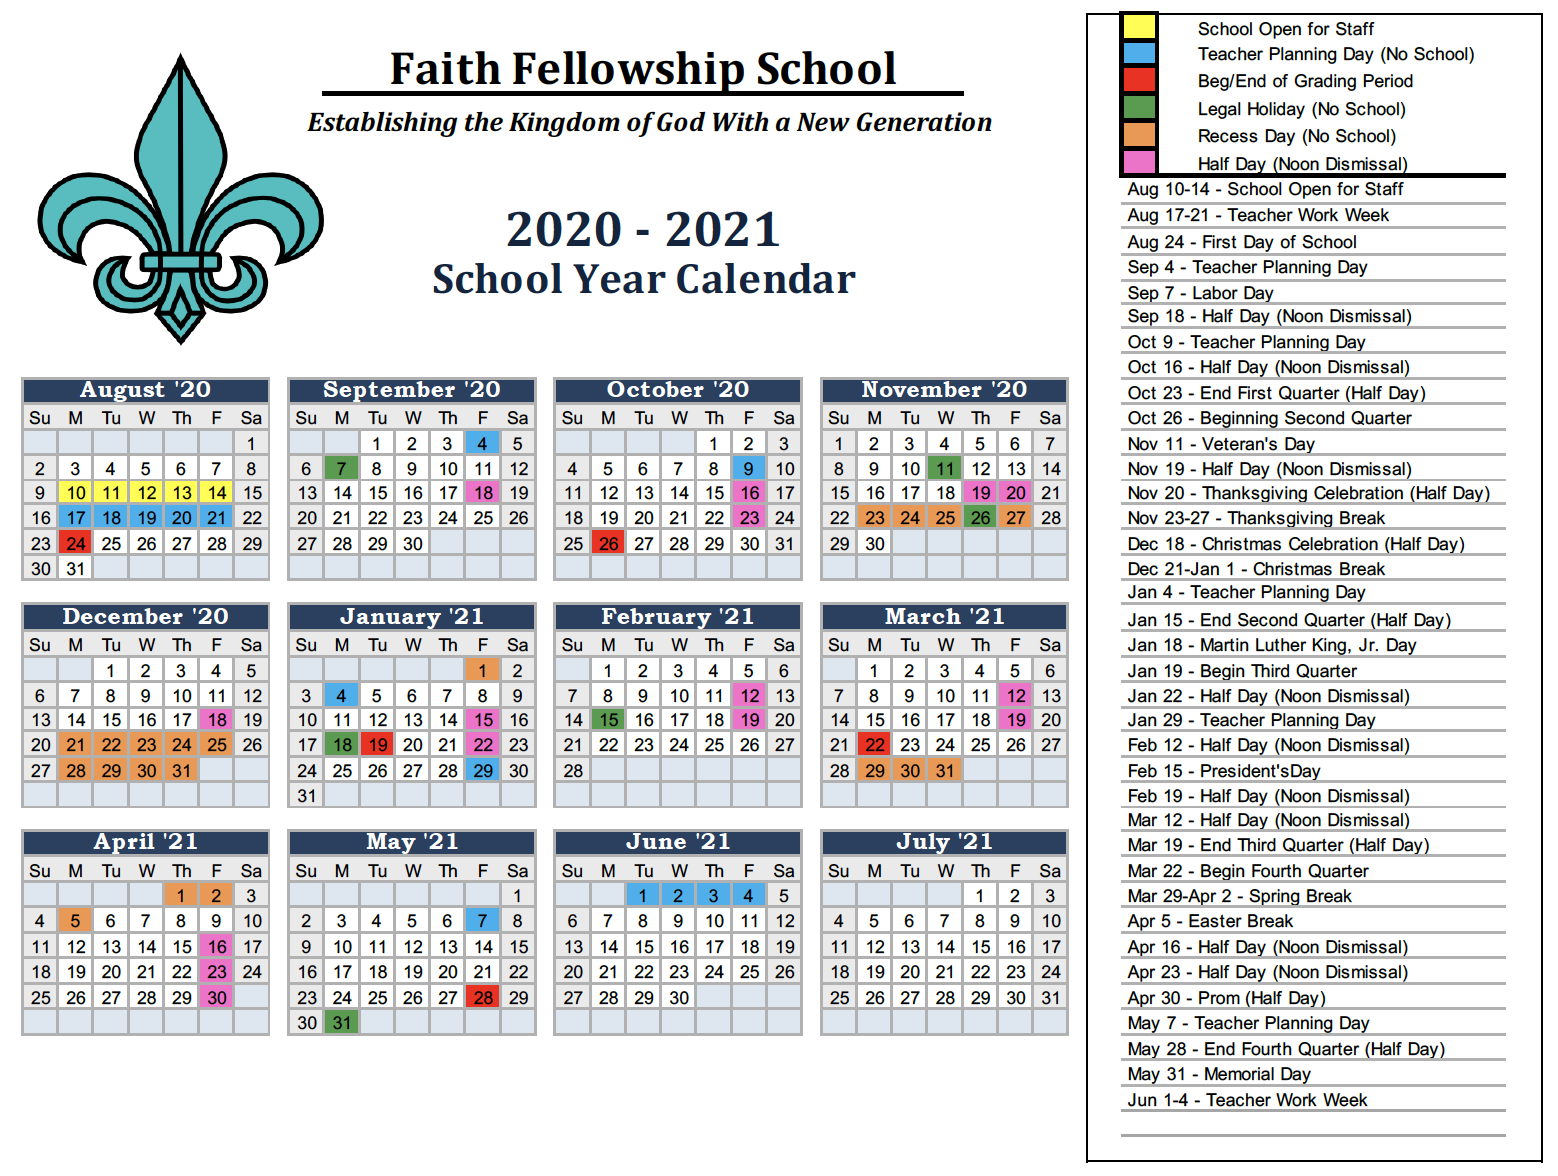 calendars-schedules-faith-fellowship-school